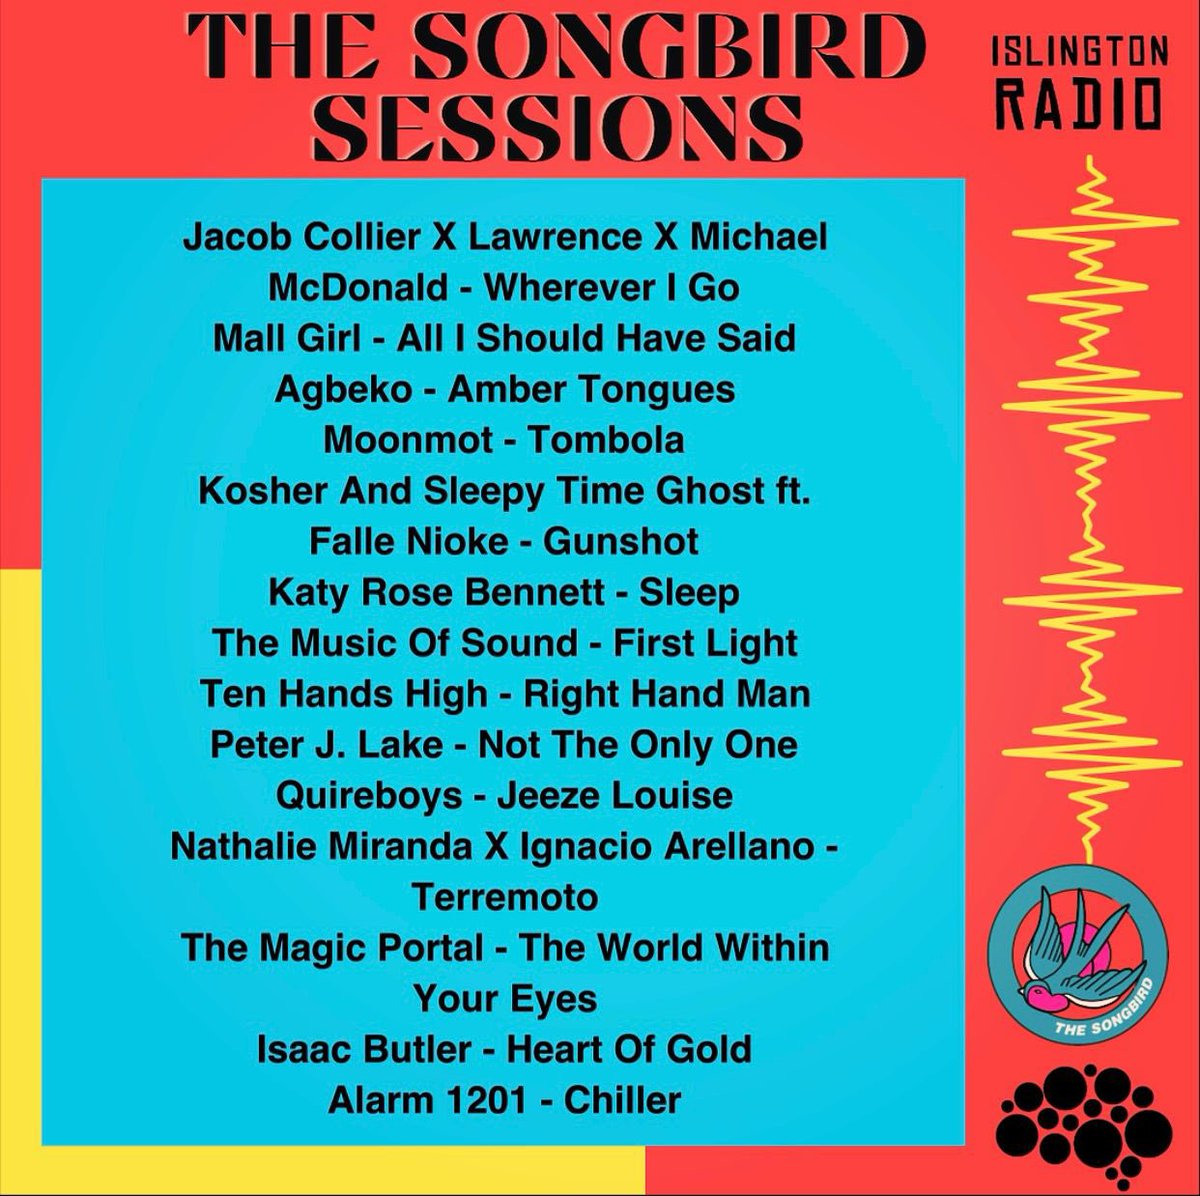 mixcloud.com/IslingtonRadio… The Songbird Sessions for @TheSongbird_HQ on @IslingtonRadio has landed! Check out music from @solareyesmusic @beccajamesuk @JFlamesOnDaBeat @Wookalily @jarvbone @olirockberger @Kamalnw @marvelriot @benjamin_bms @jacobcollier @weareagbeko @ktbennett >>>